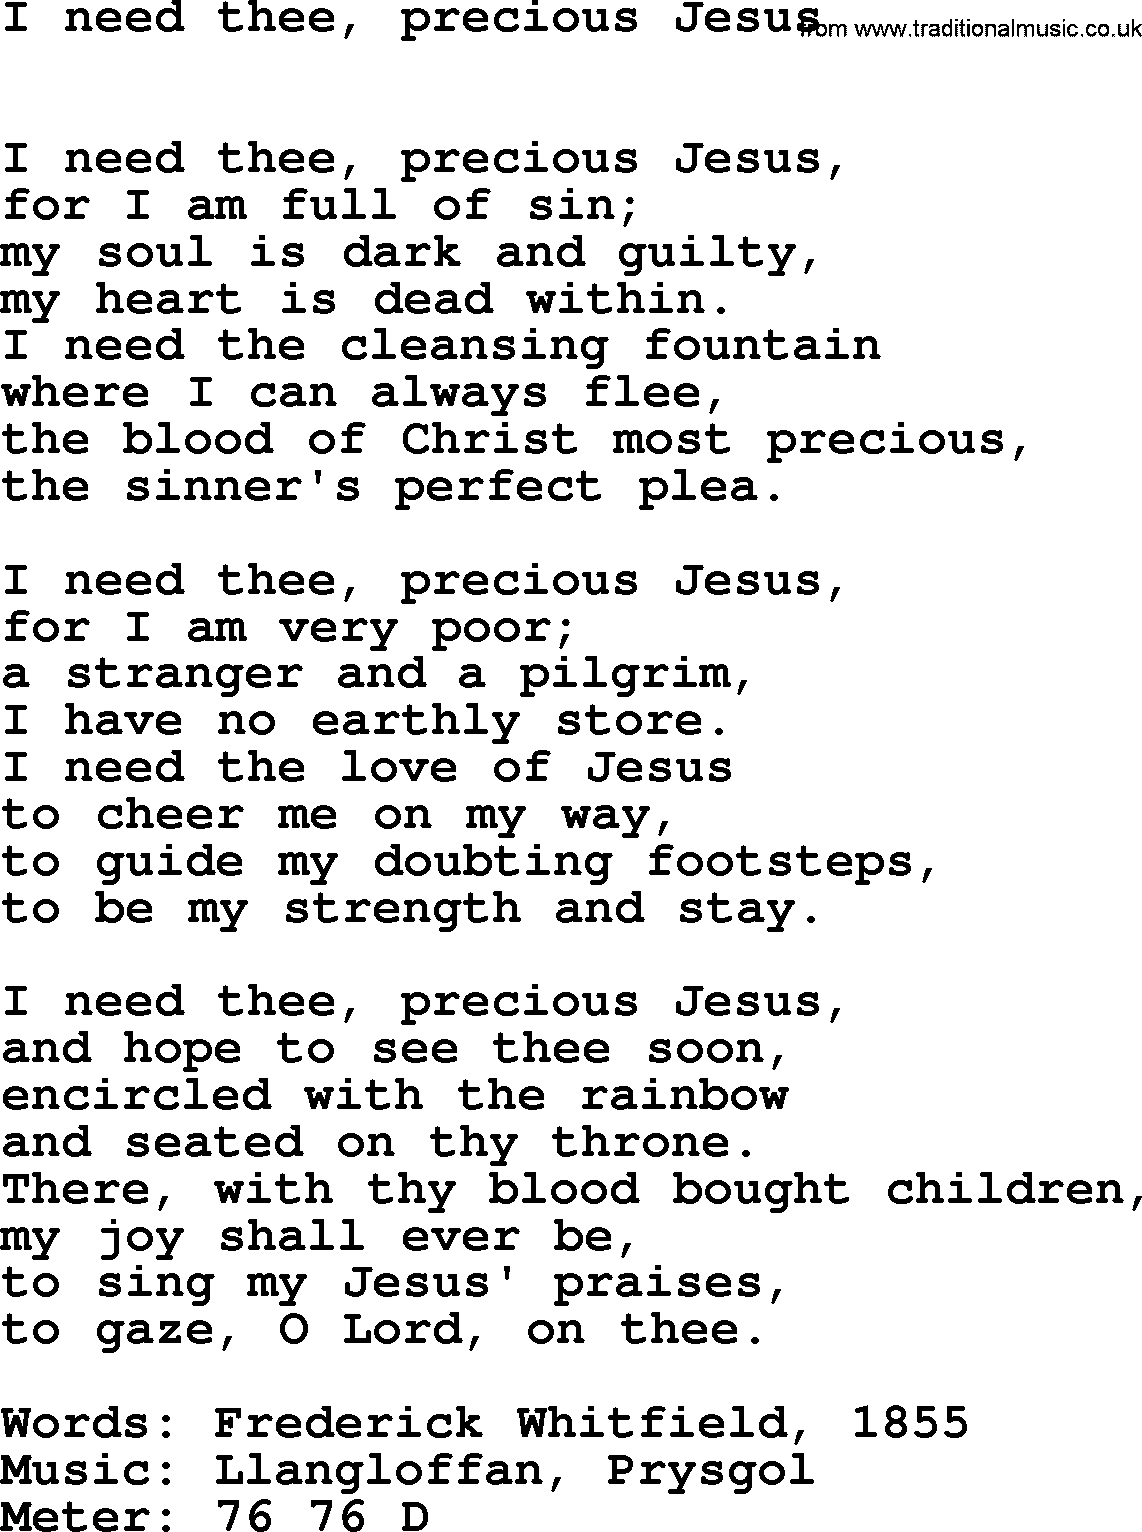 Book of Common Praise Hymn: I Need Thee, Precious Jesus.txt lyrics with midi music